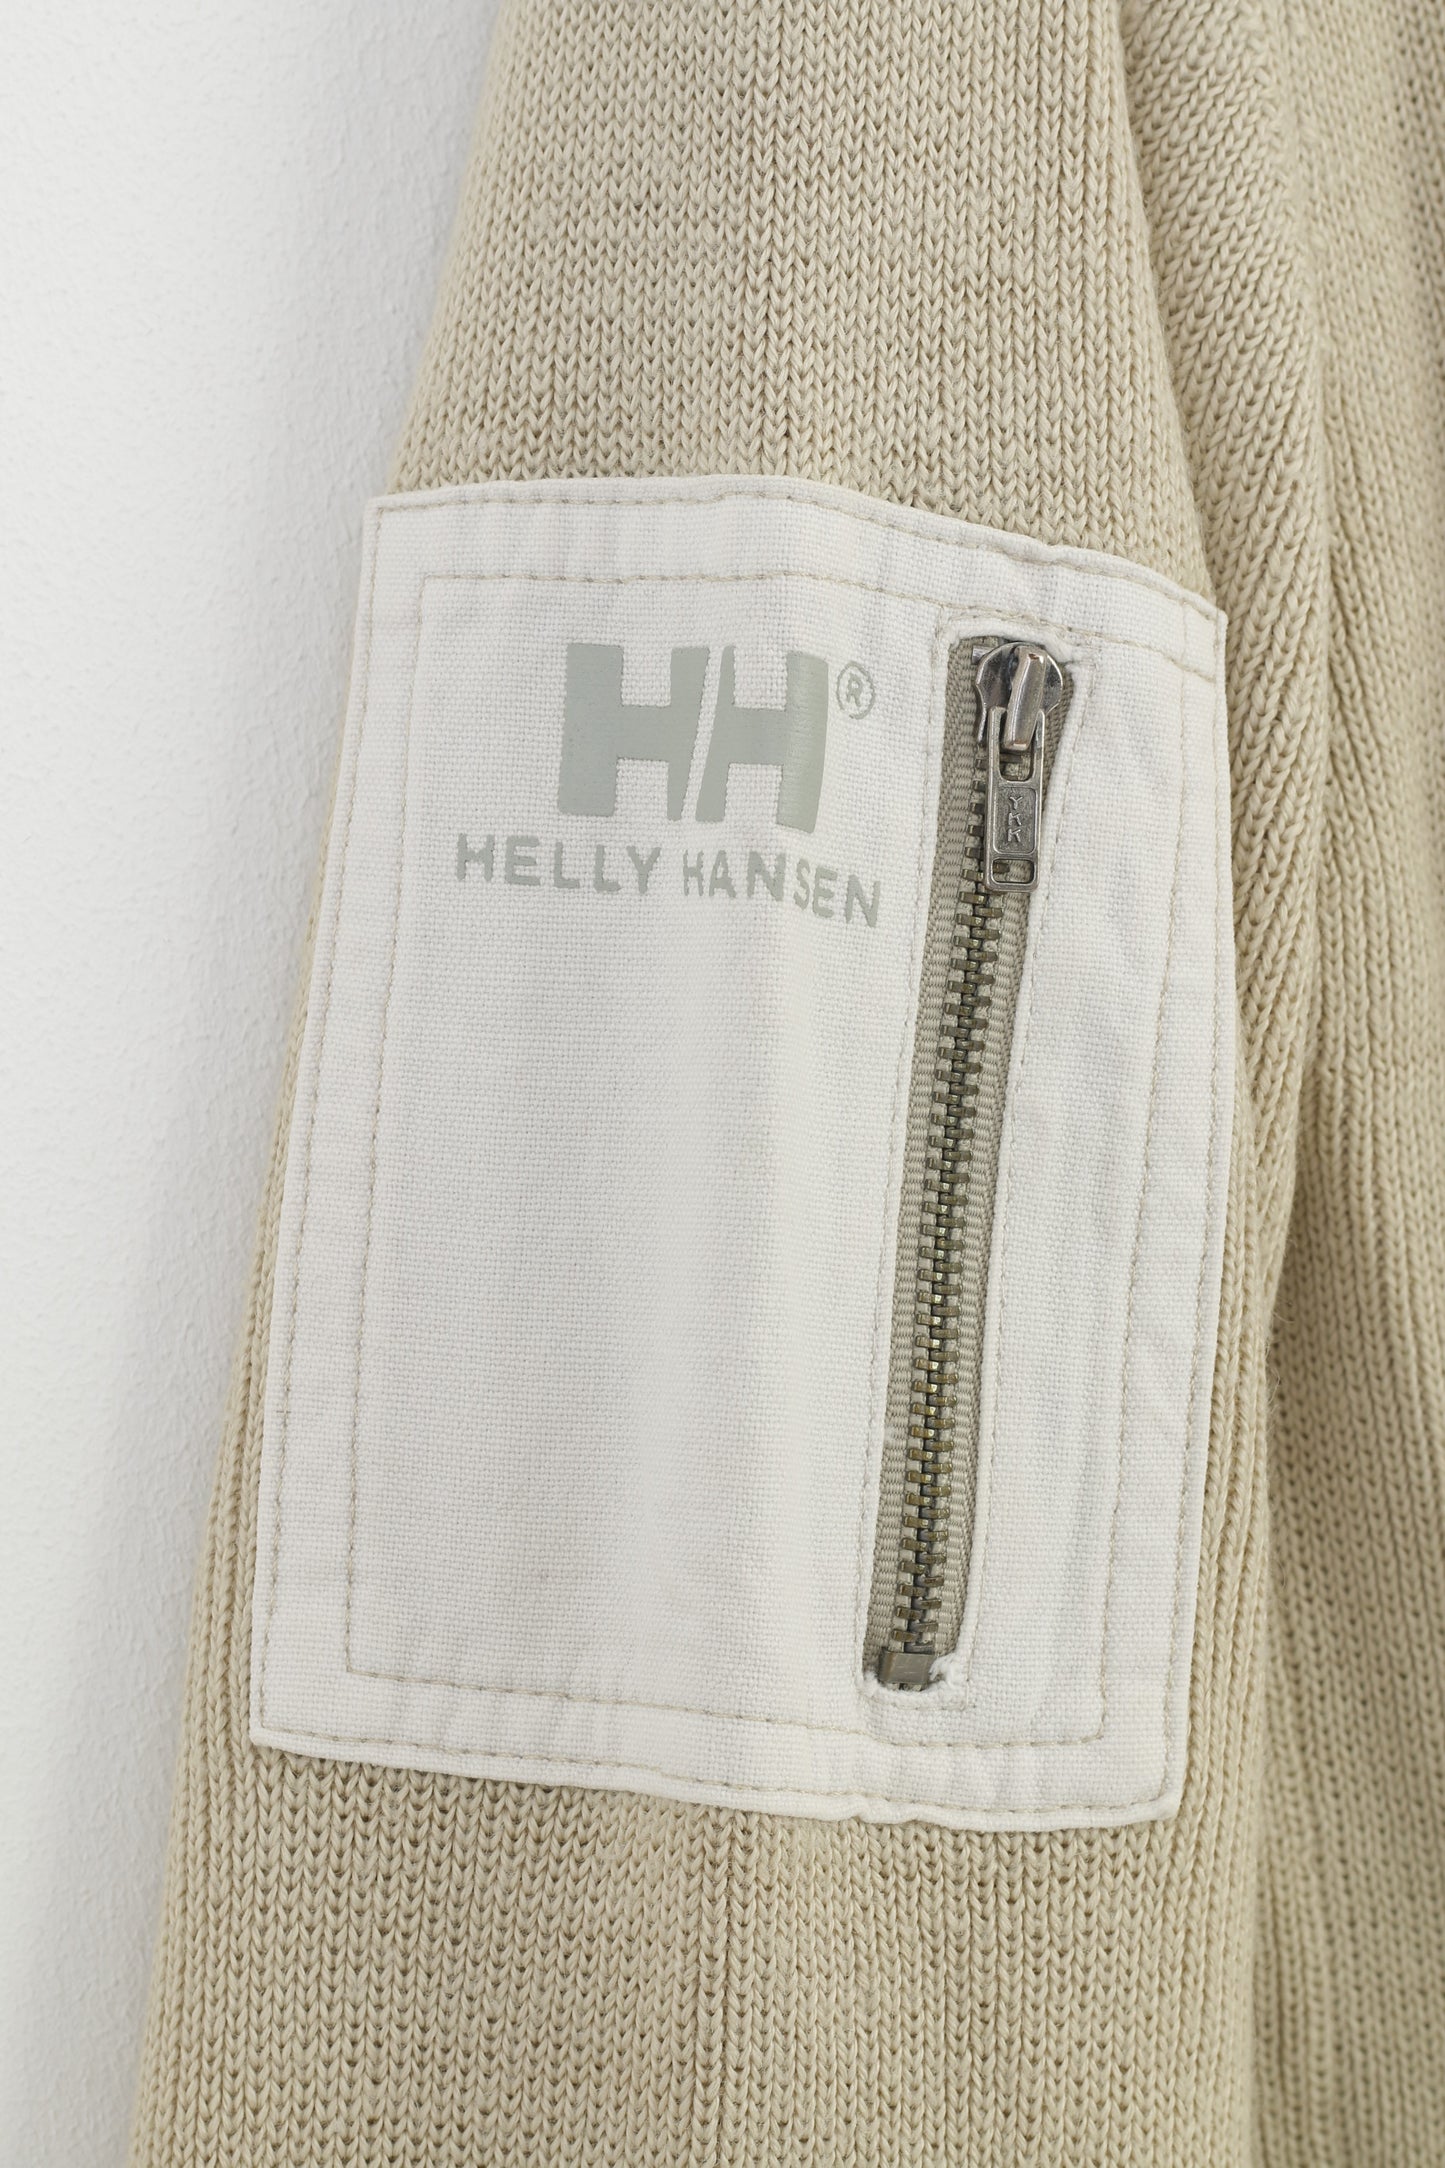 Helly Hansen Men M Sweater Beige Sport Full Zipper Beige Acrylic Wool Outdoor Top